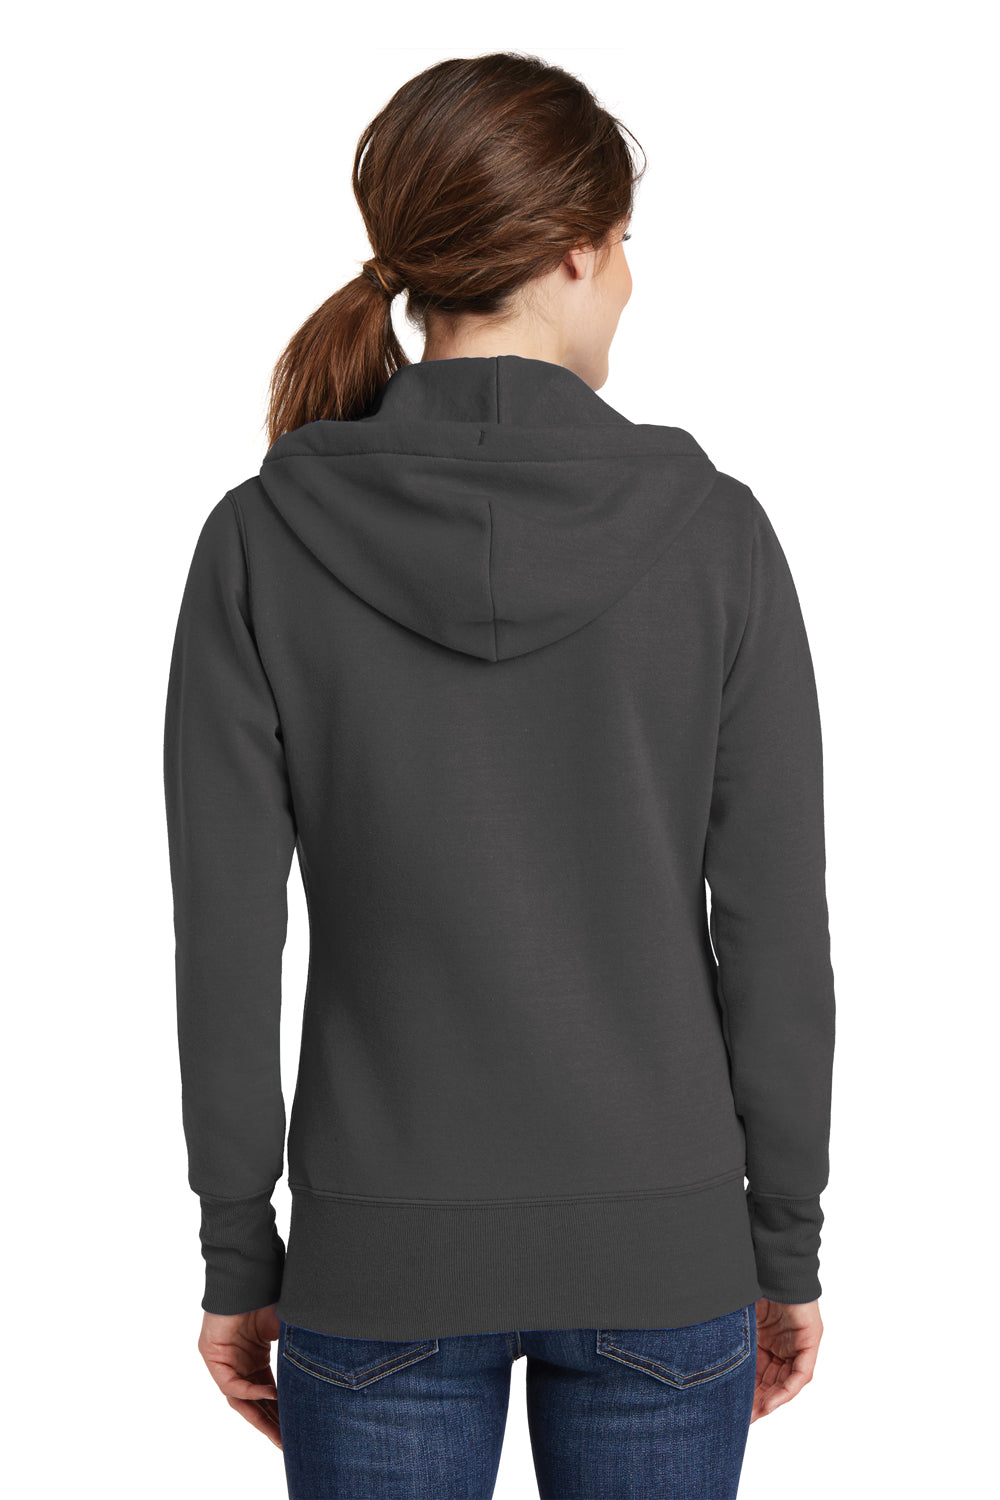 Port & Company Ladies Core Fleece Pullover Hooded Sweatshirt, Product